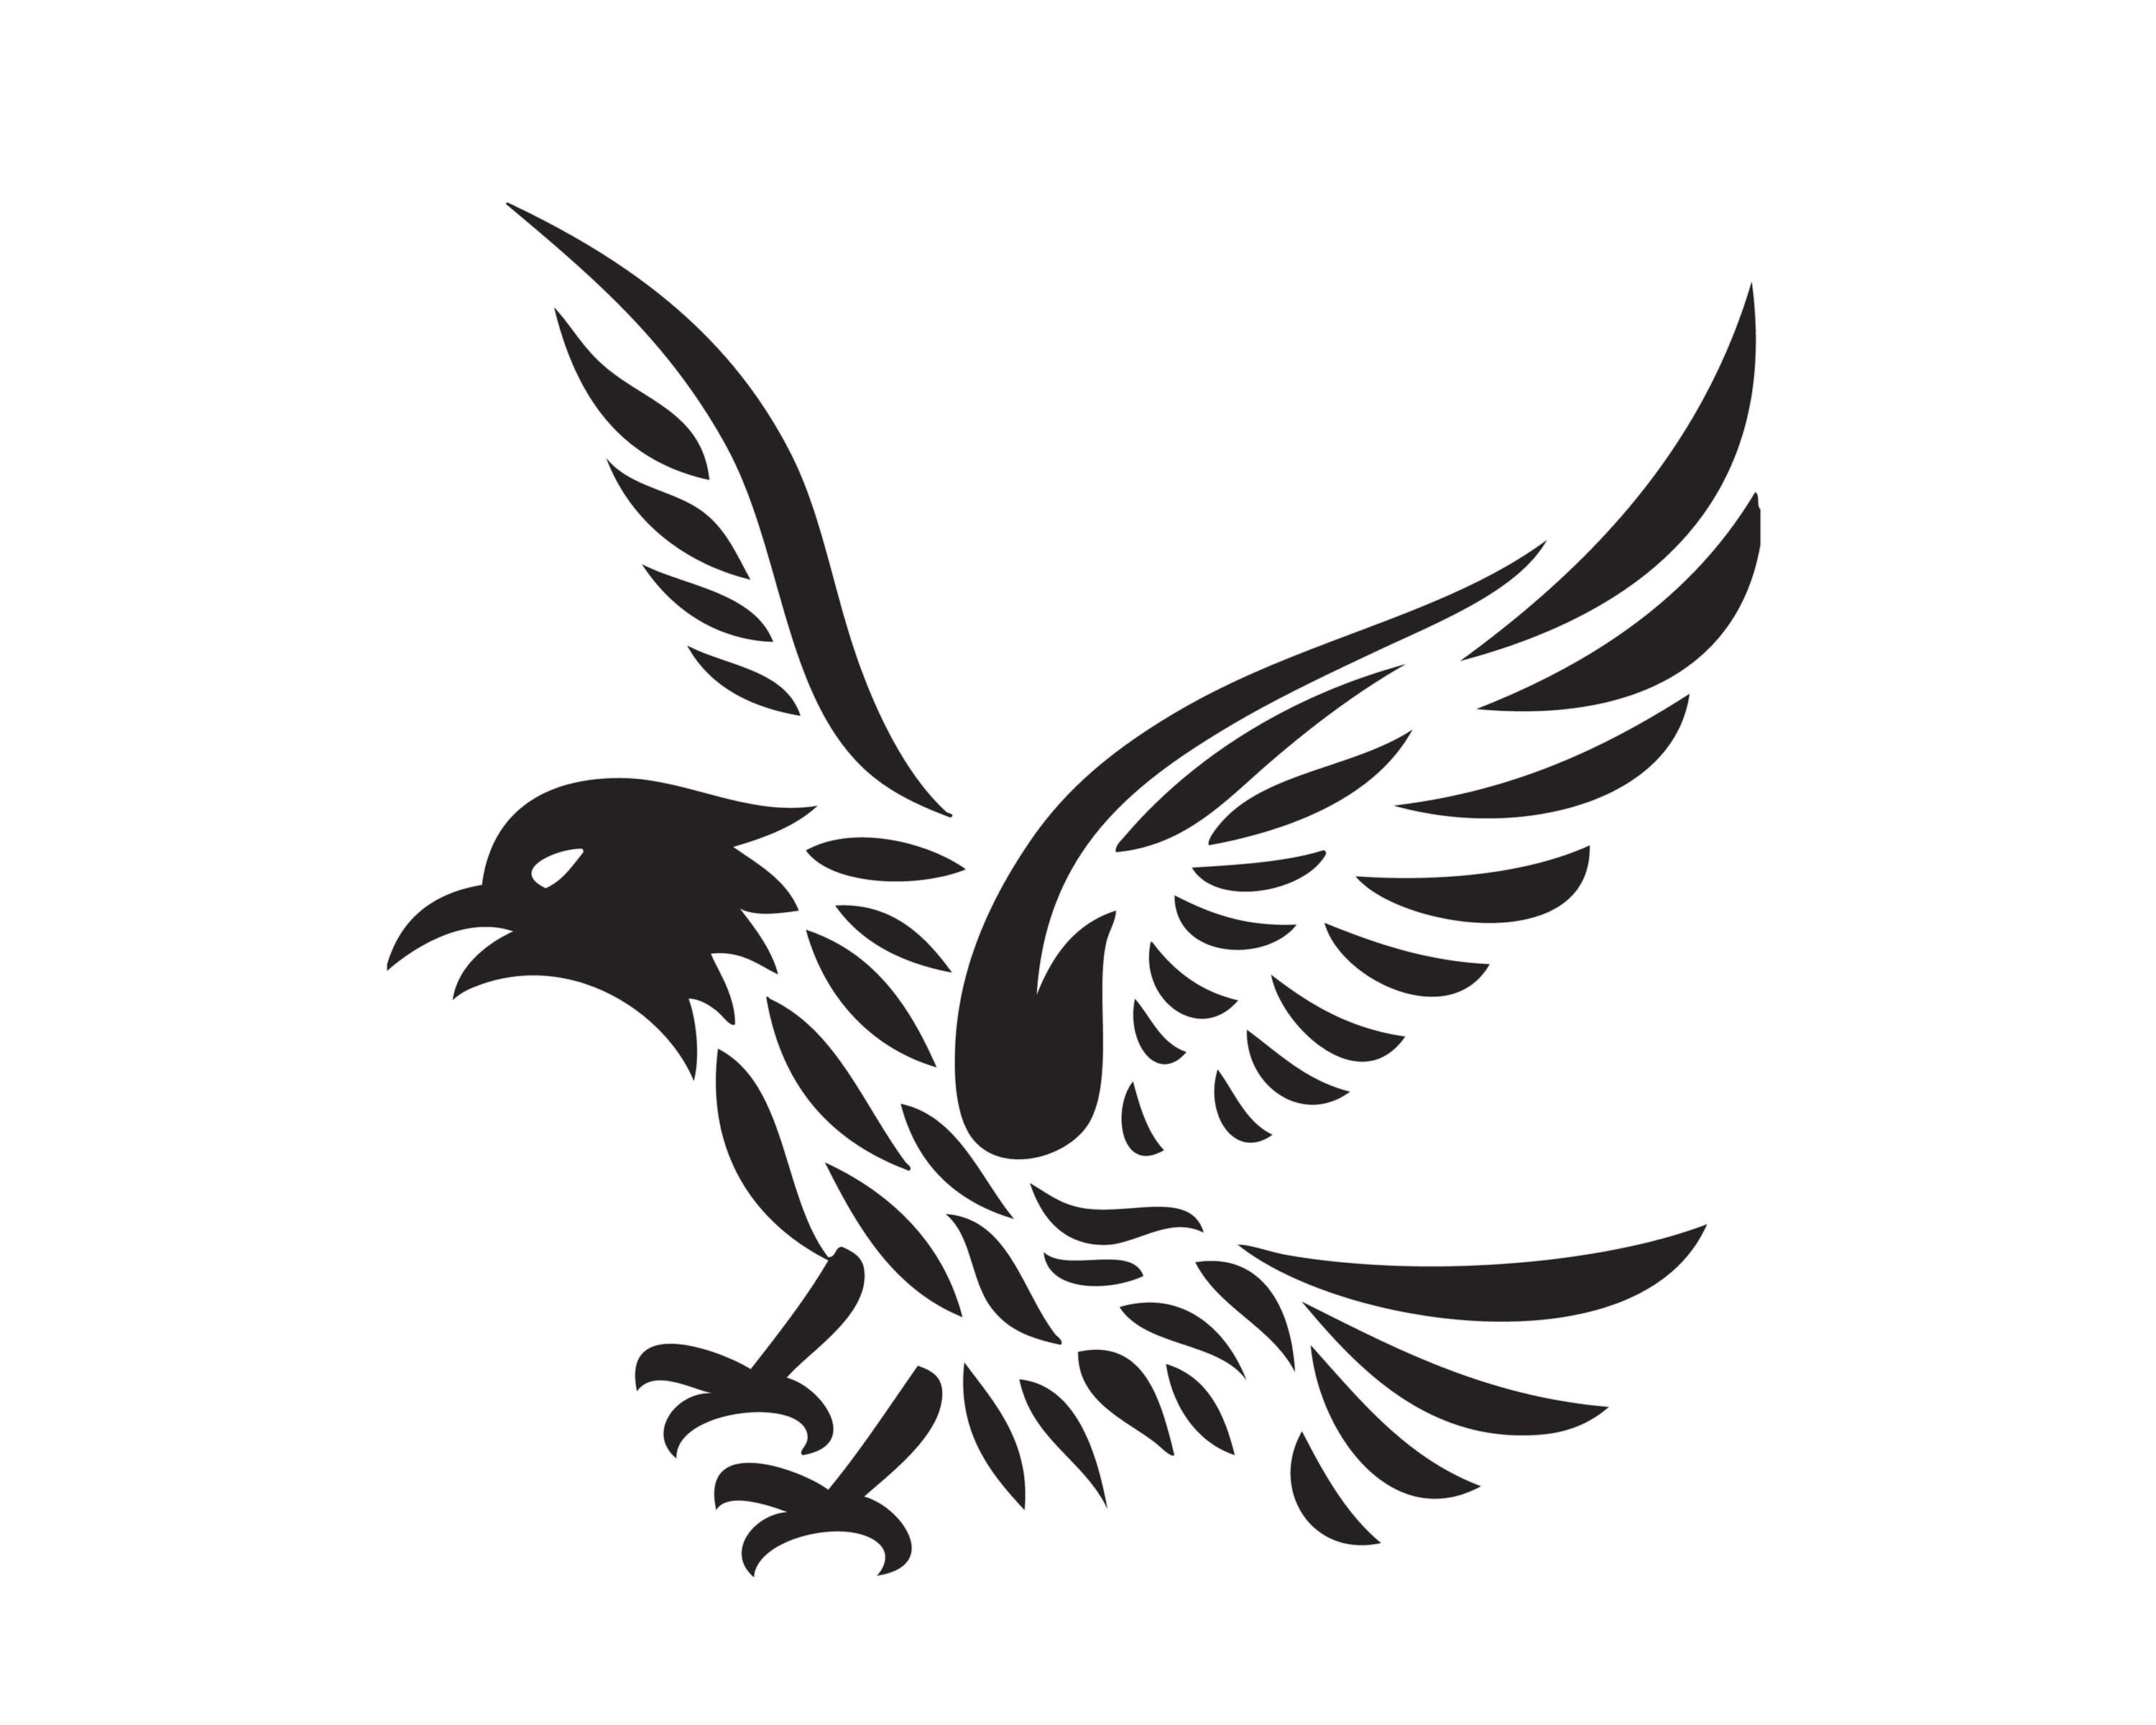 2. Feminine Eagle Tattoos - wide 4